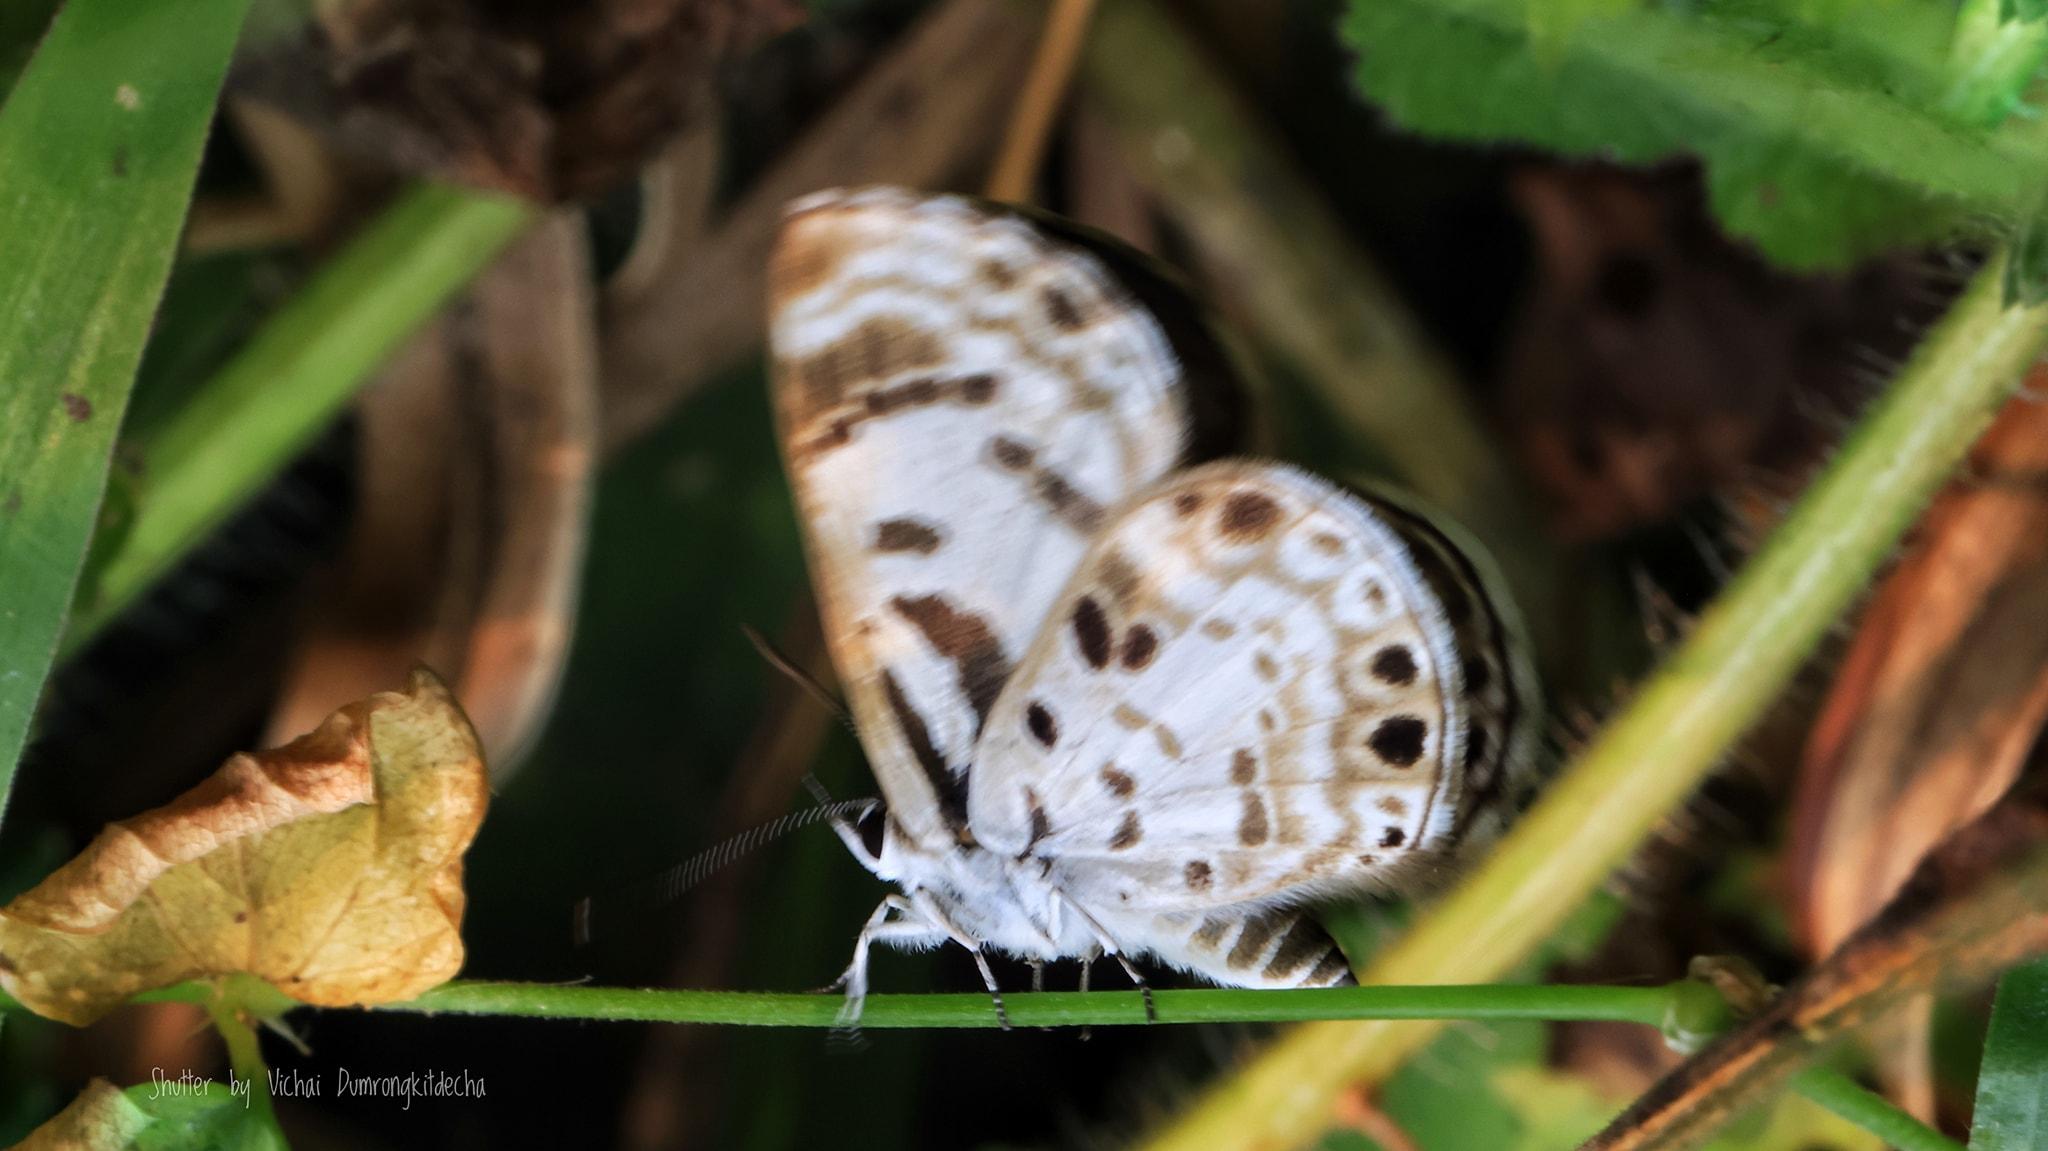 Niphanda cymbia cymbia : Small Pointed Pierrot / ผีเสื้อม่วงปีกแหลมเล็ก